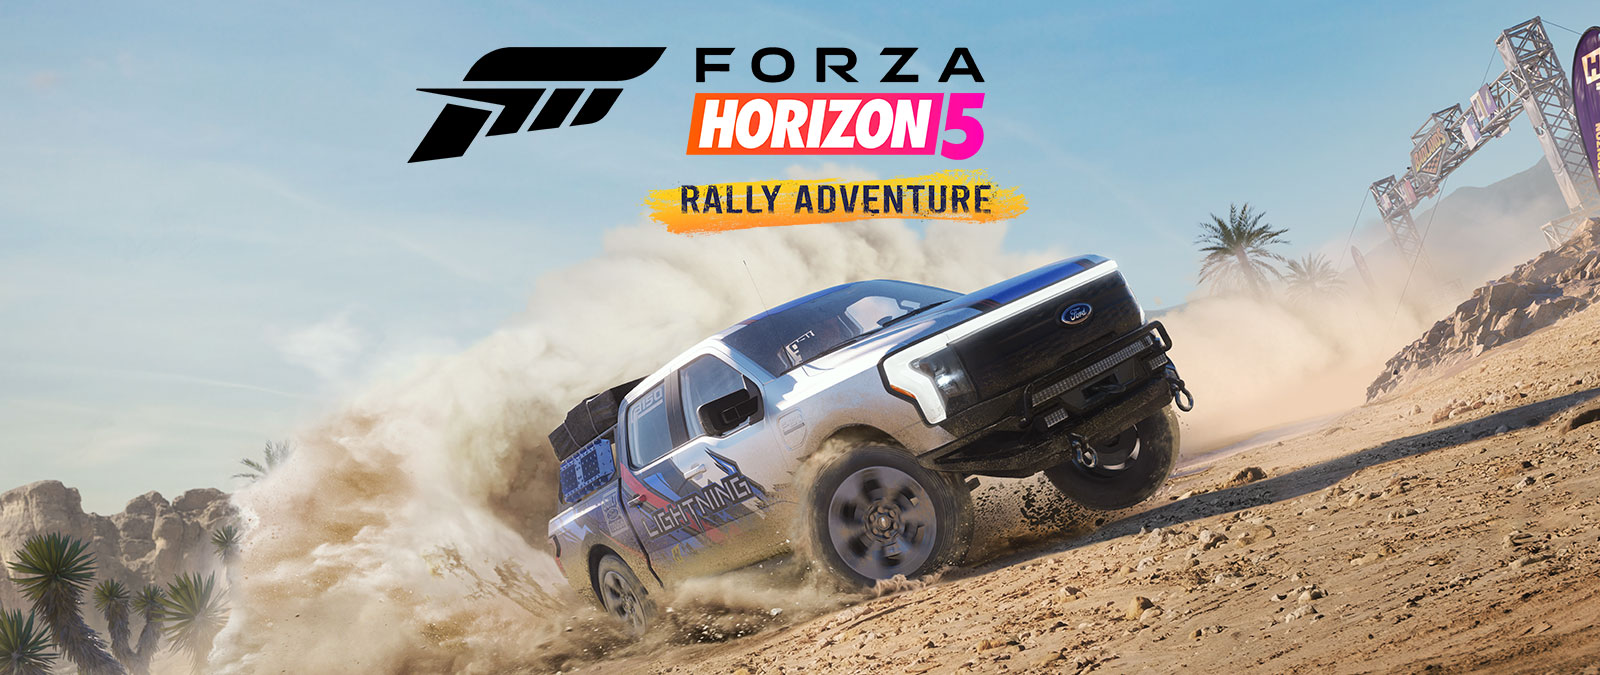 Forza Logo, Forza Horizon 5, Rally Adventure, a Ford 150 Lightning kicks up dust on a dirt road.